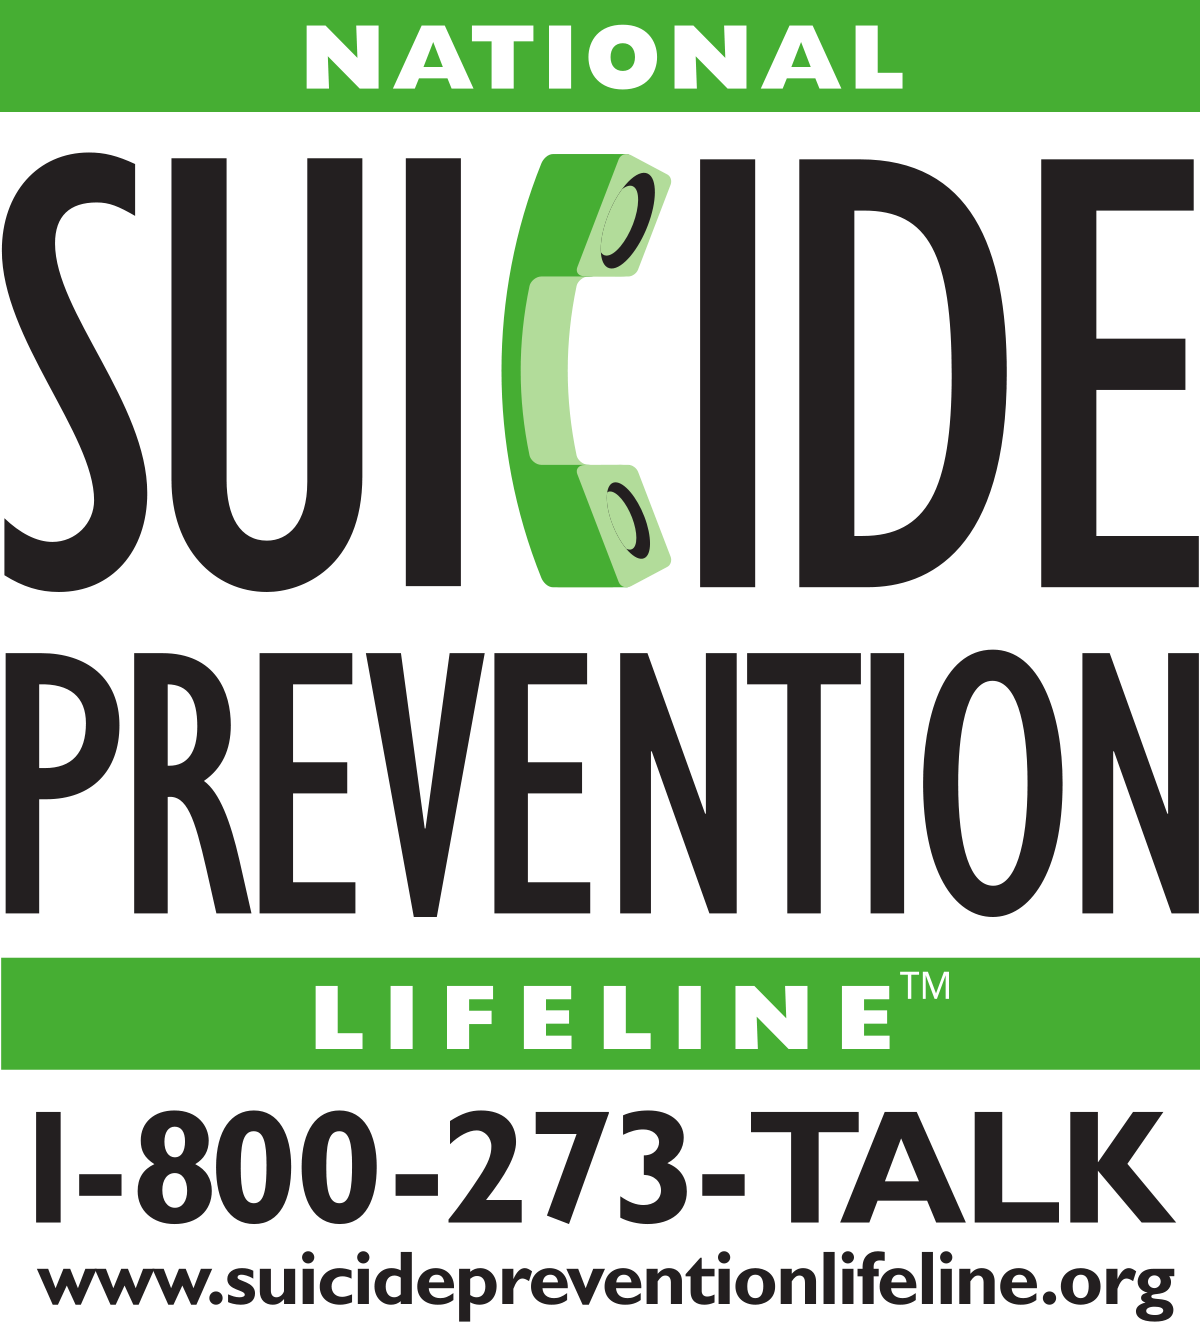 National Suicide Prevention Lifeline 1-800-273-TALK